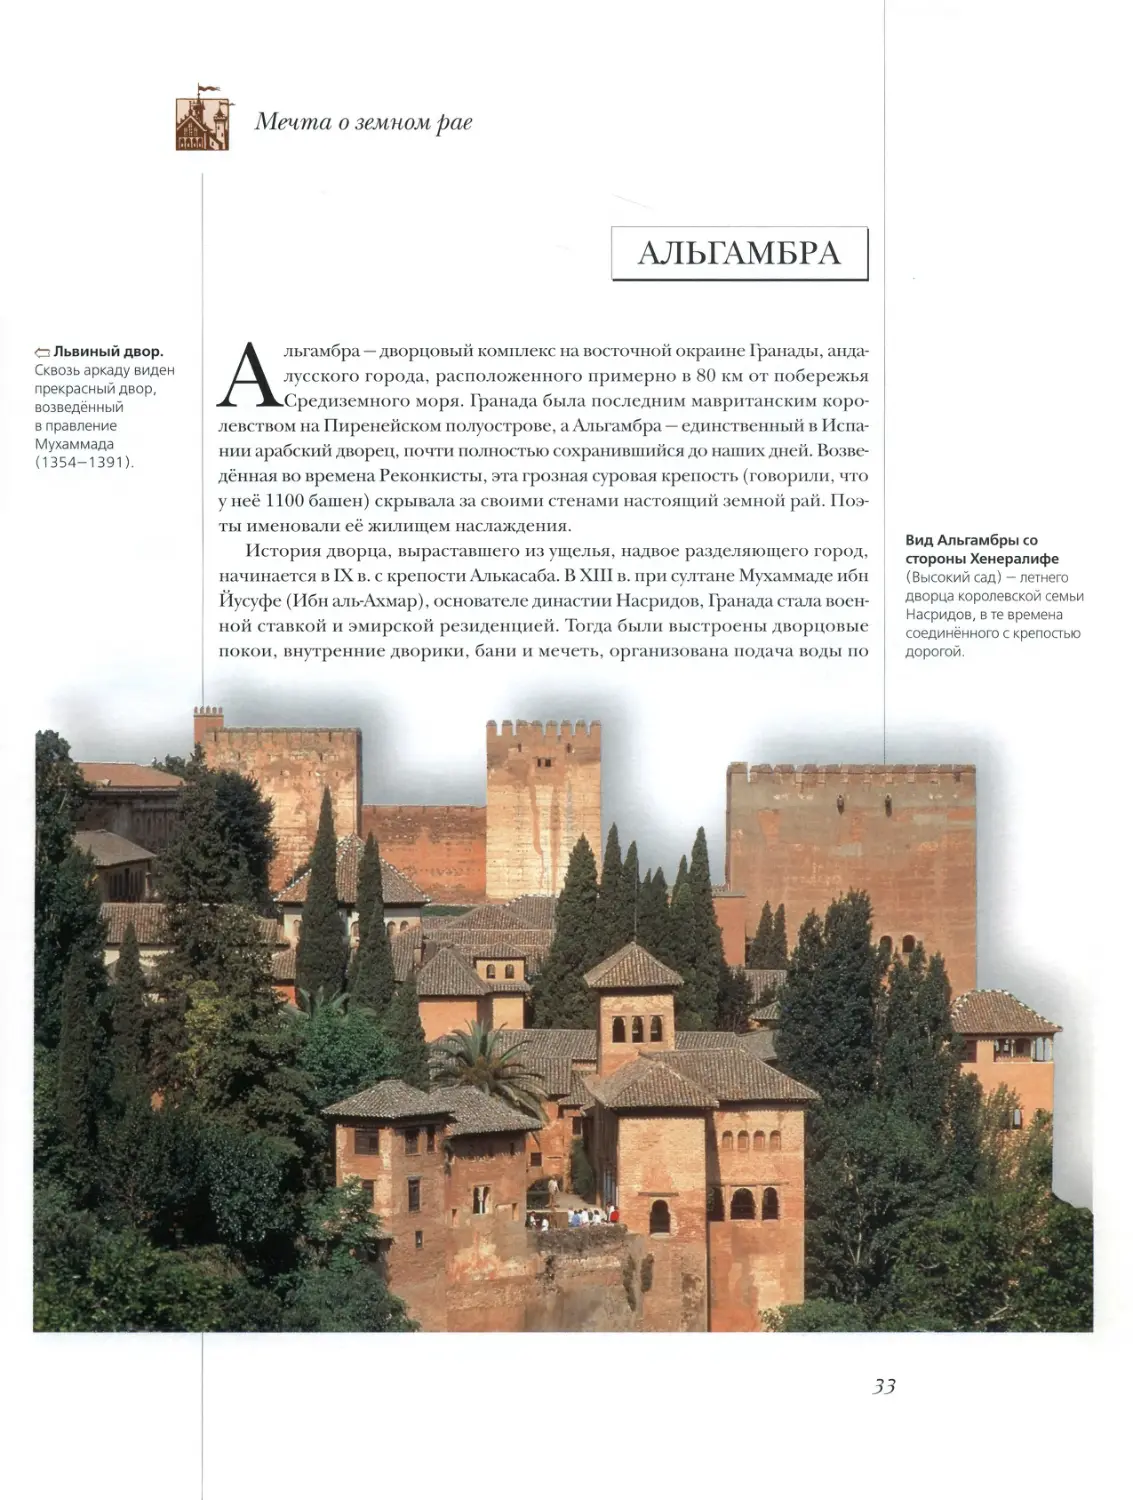 --- Альгамбра